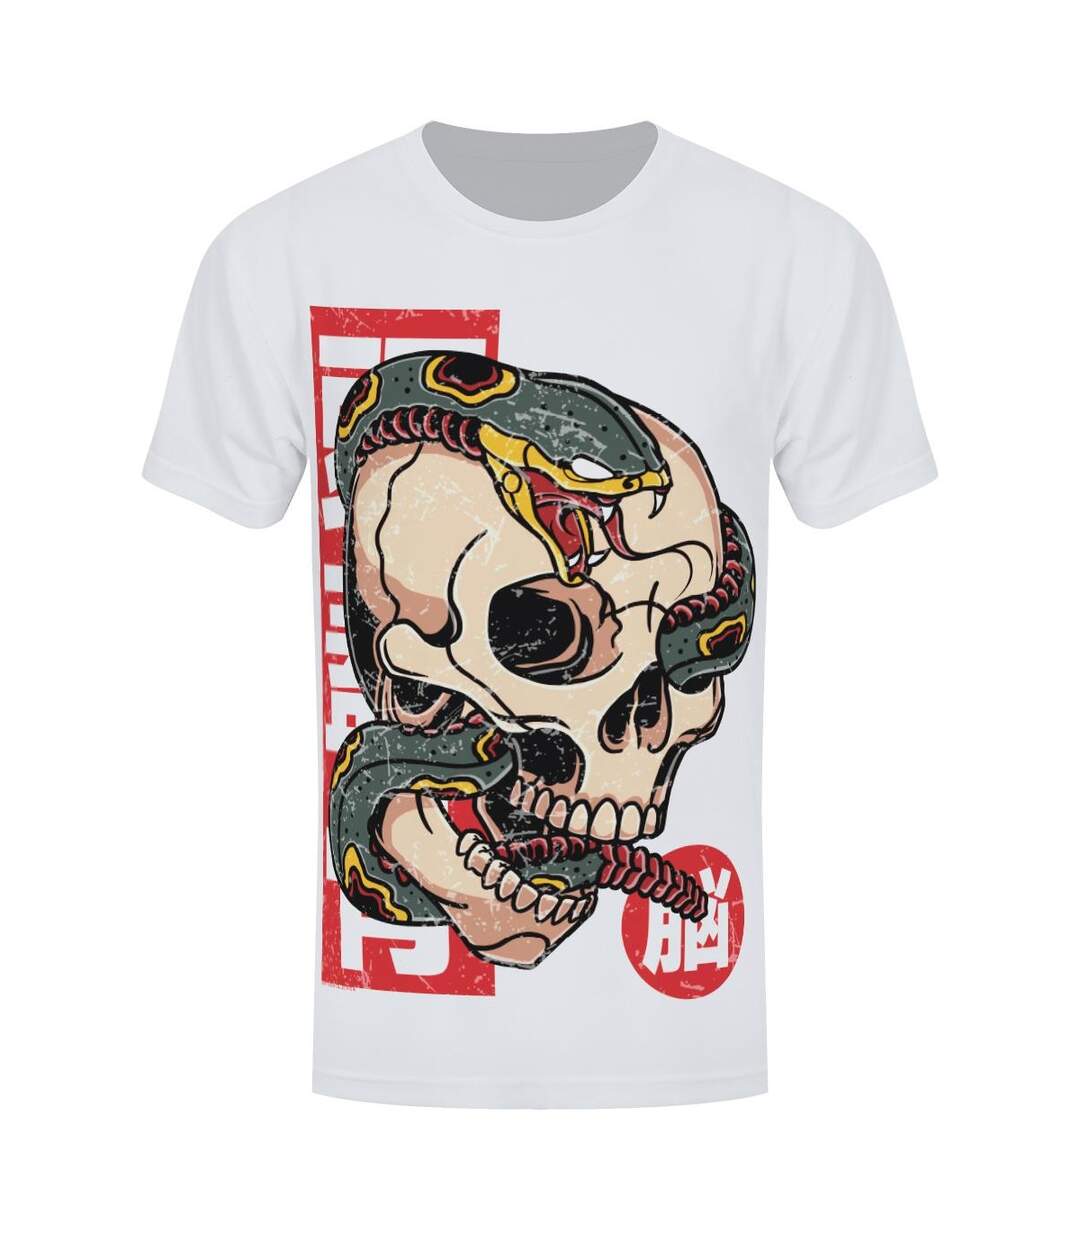 Unorthodox Collective T-Shirt T-Shirt Crâne de Serpent Tatoué (Blanc) - UTGR6106